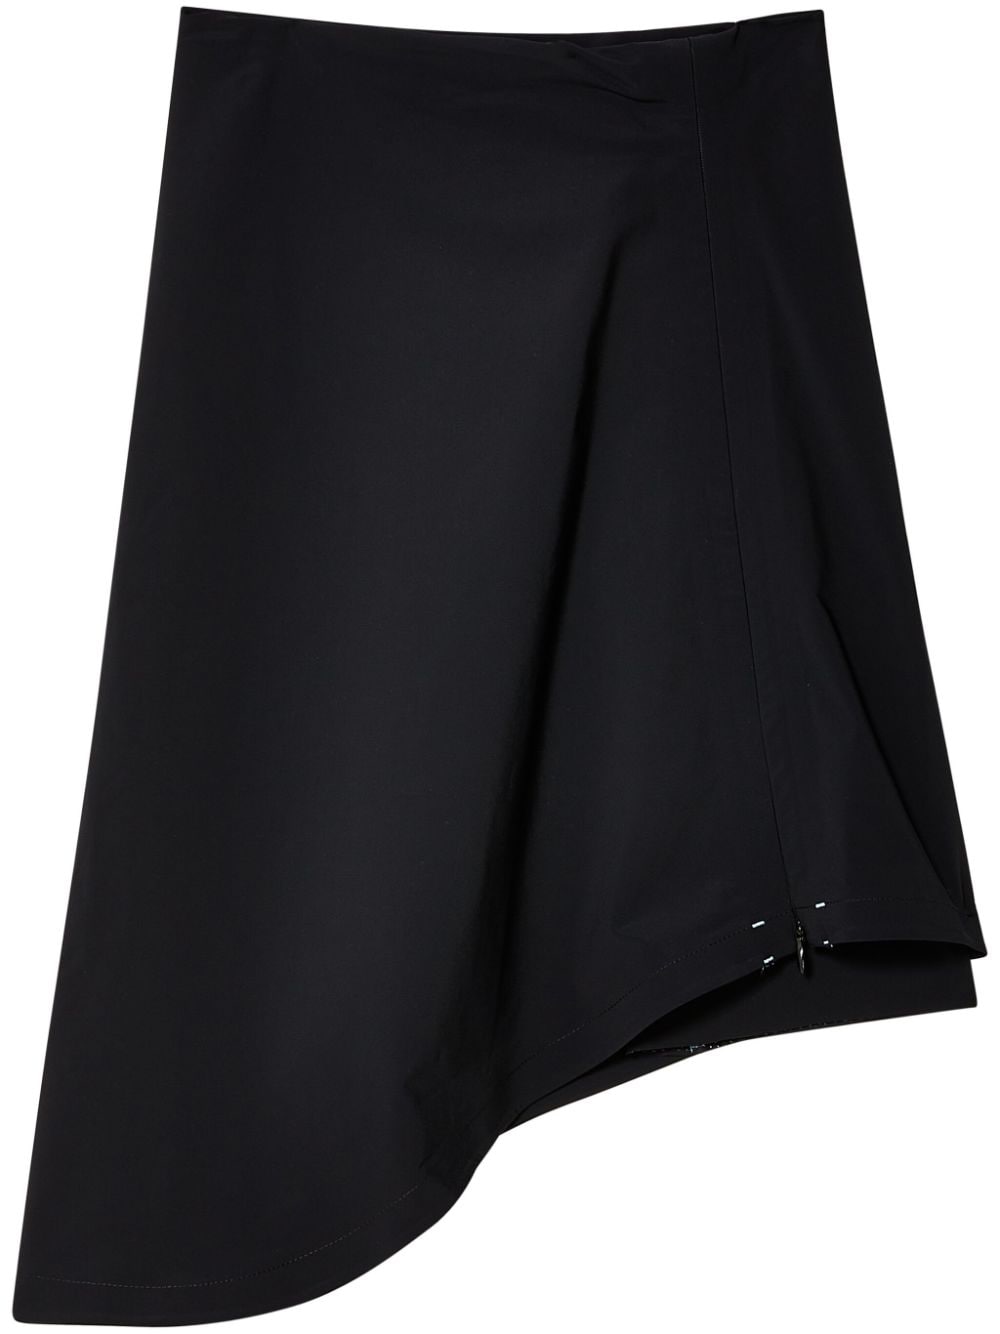 Image 1 of JOHANNA PARV falda corta con diseño asimétrico